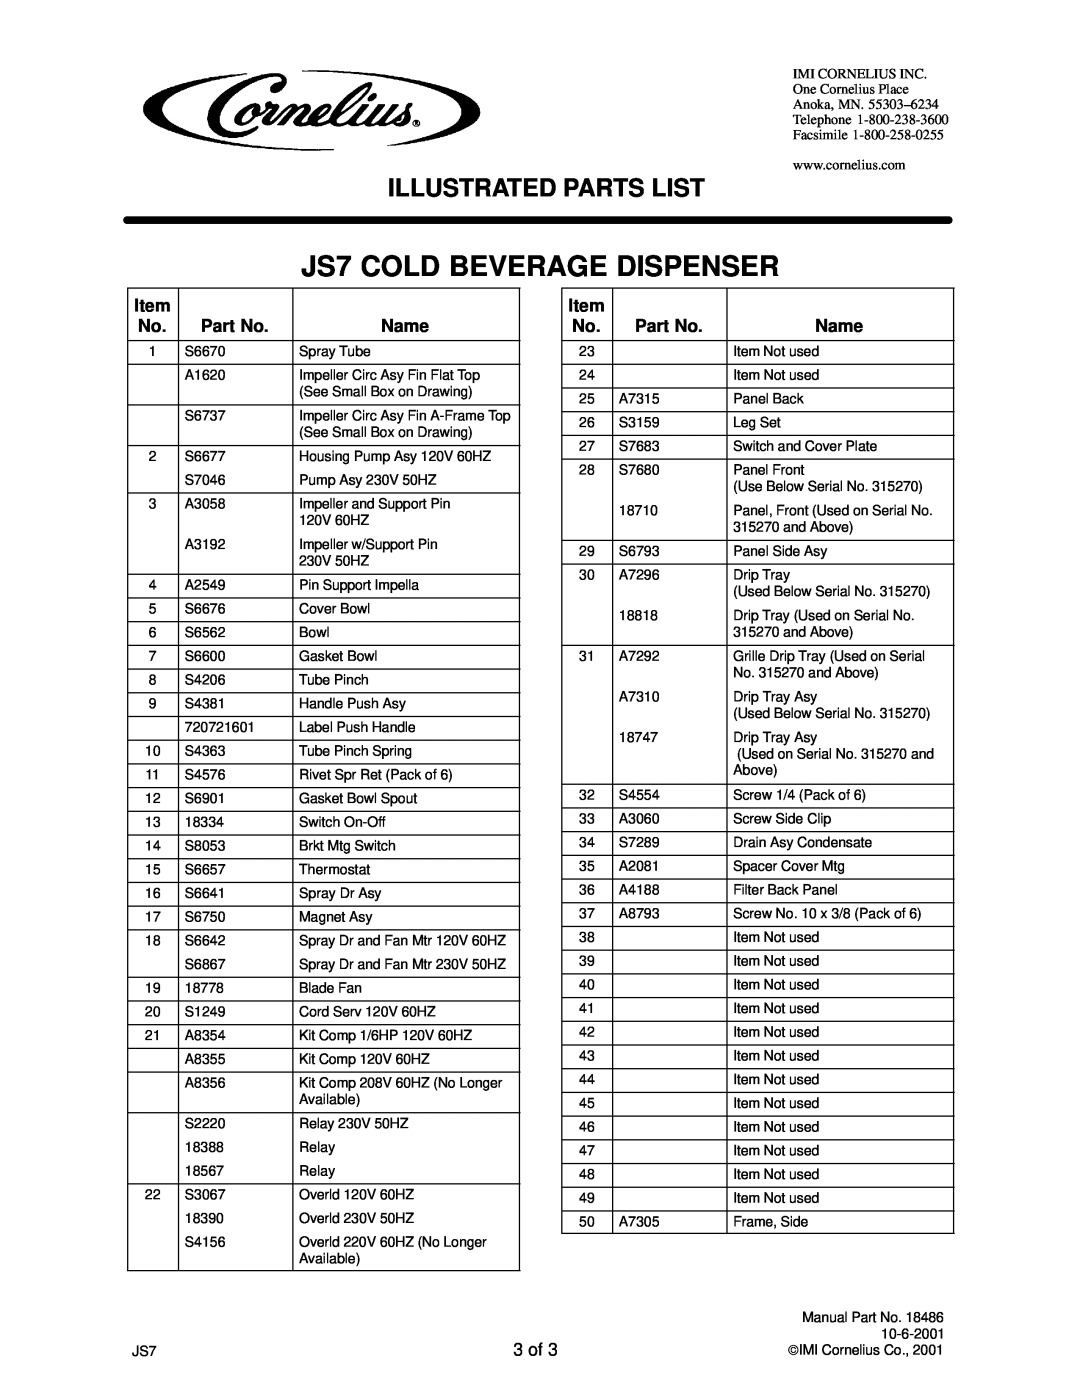 Panasonic manual Name, 3 of, JS7 COLD BEVERAGE DISPENSER, Illustrated Parts List 